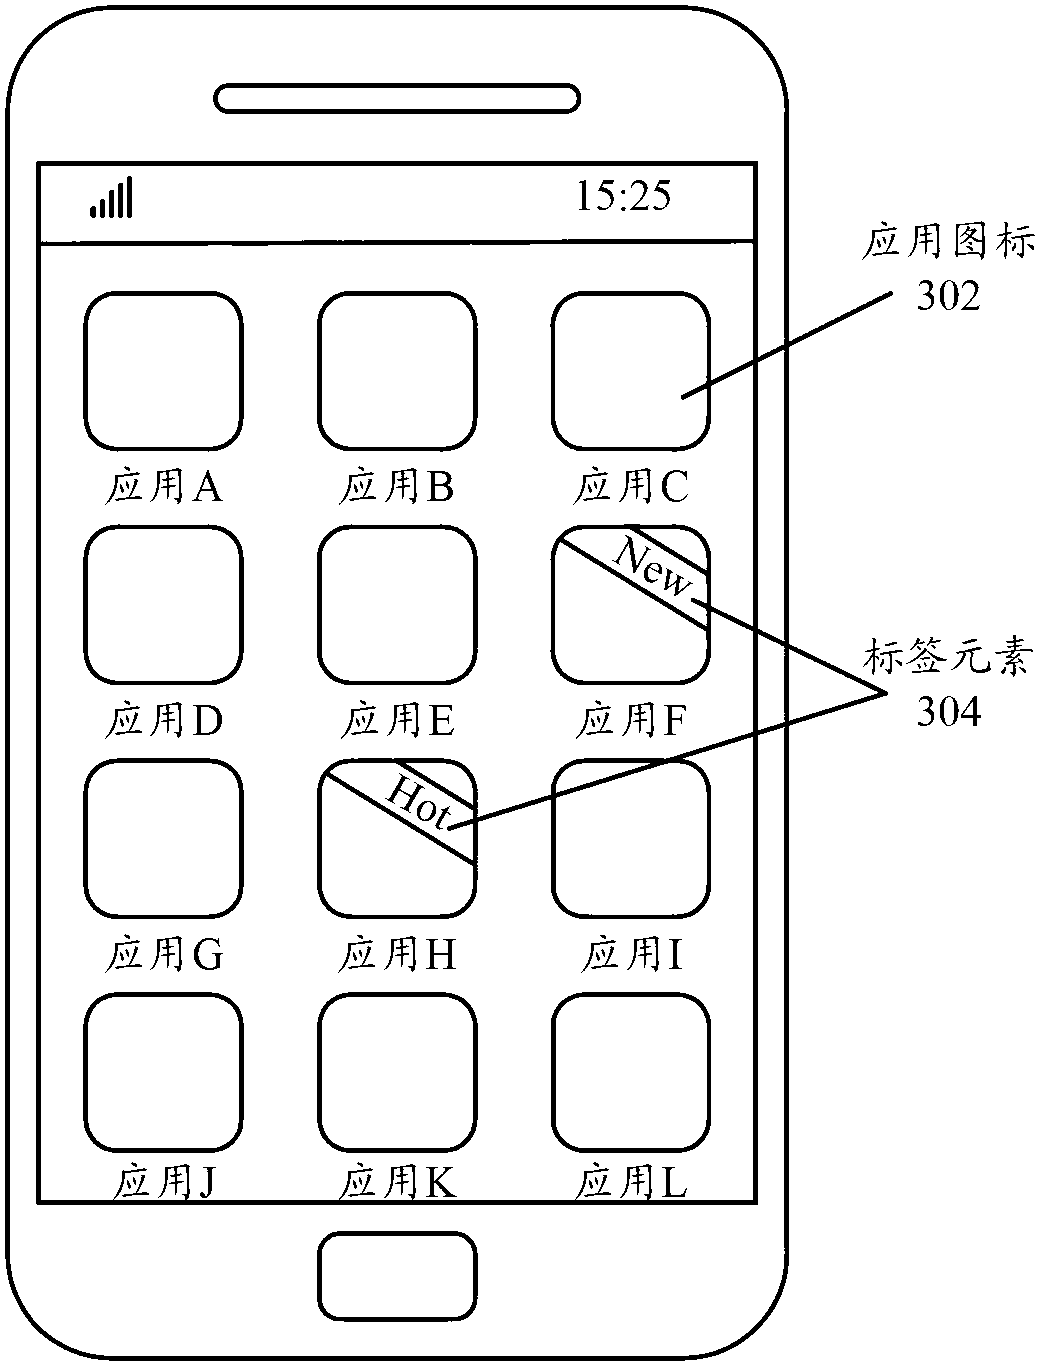 Mobile terminal and application icon display method for same